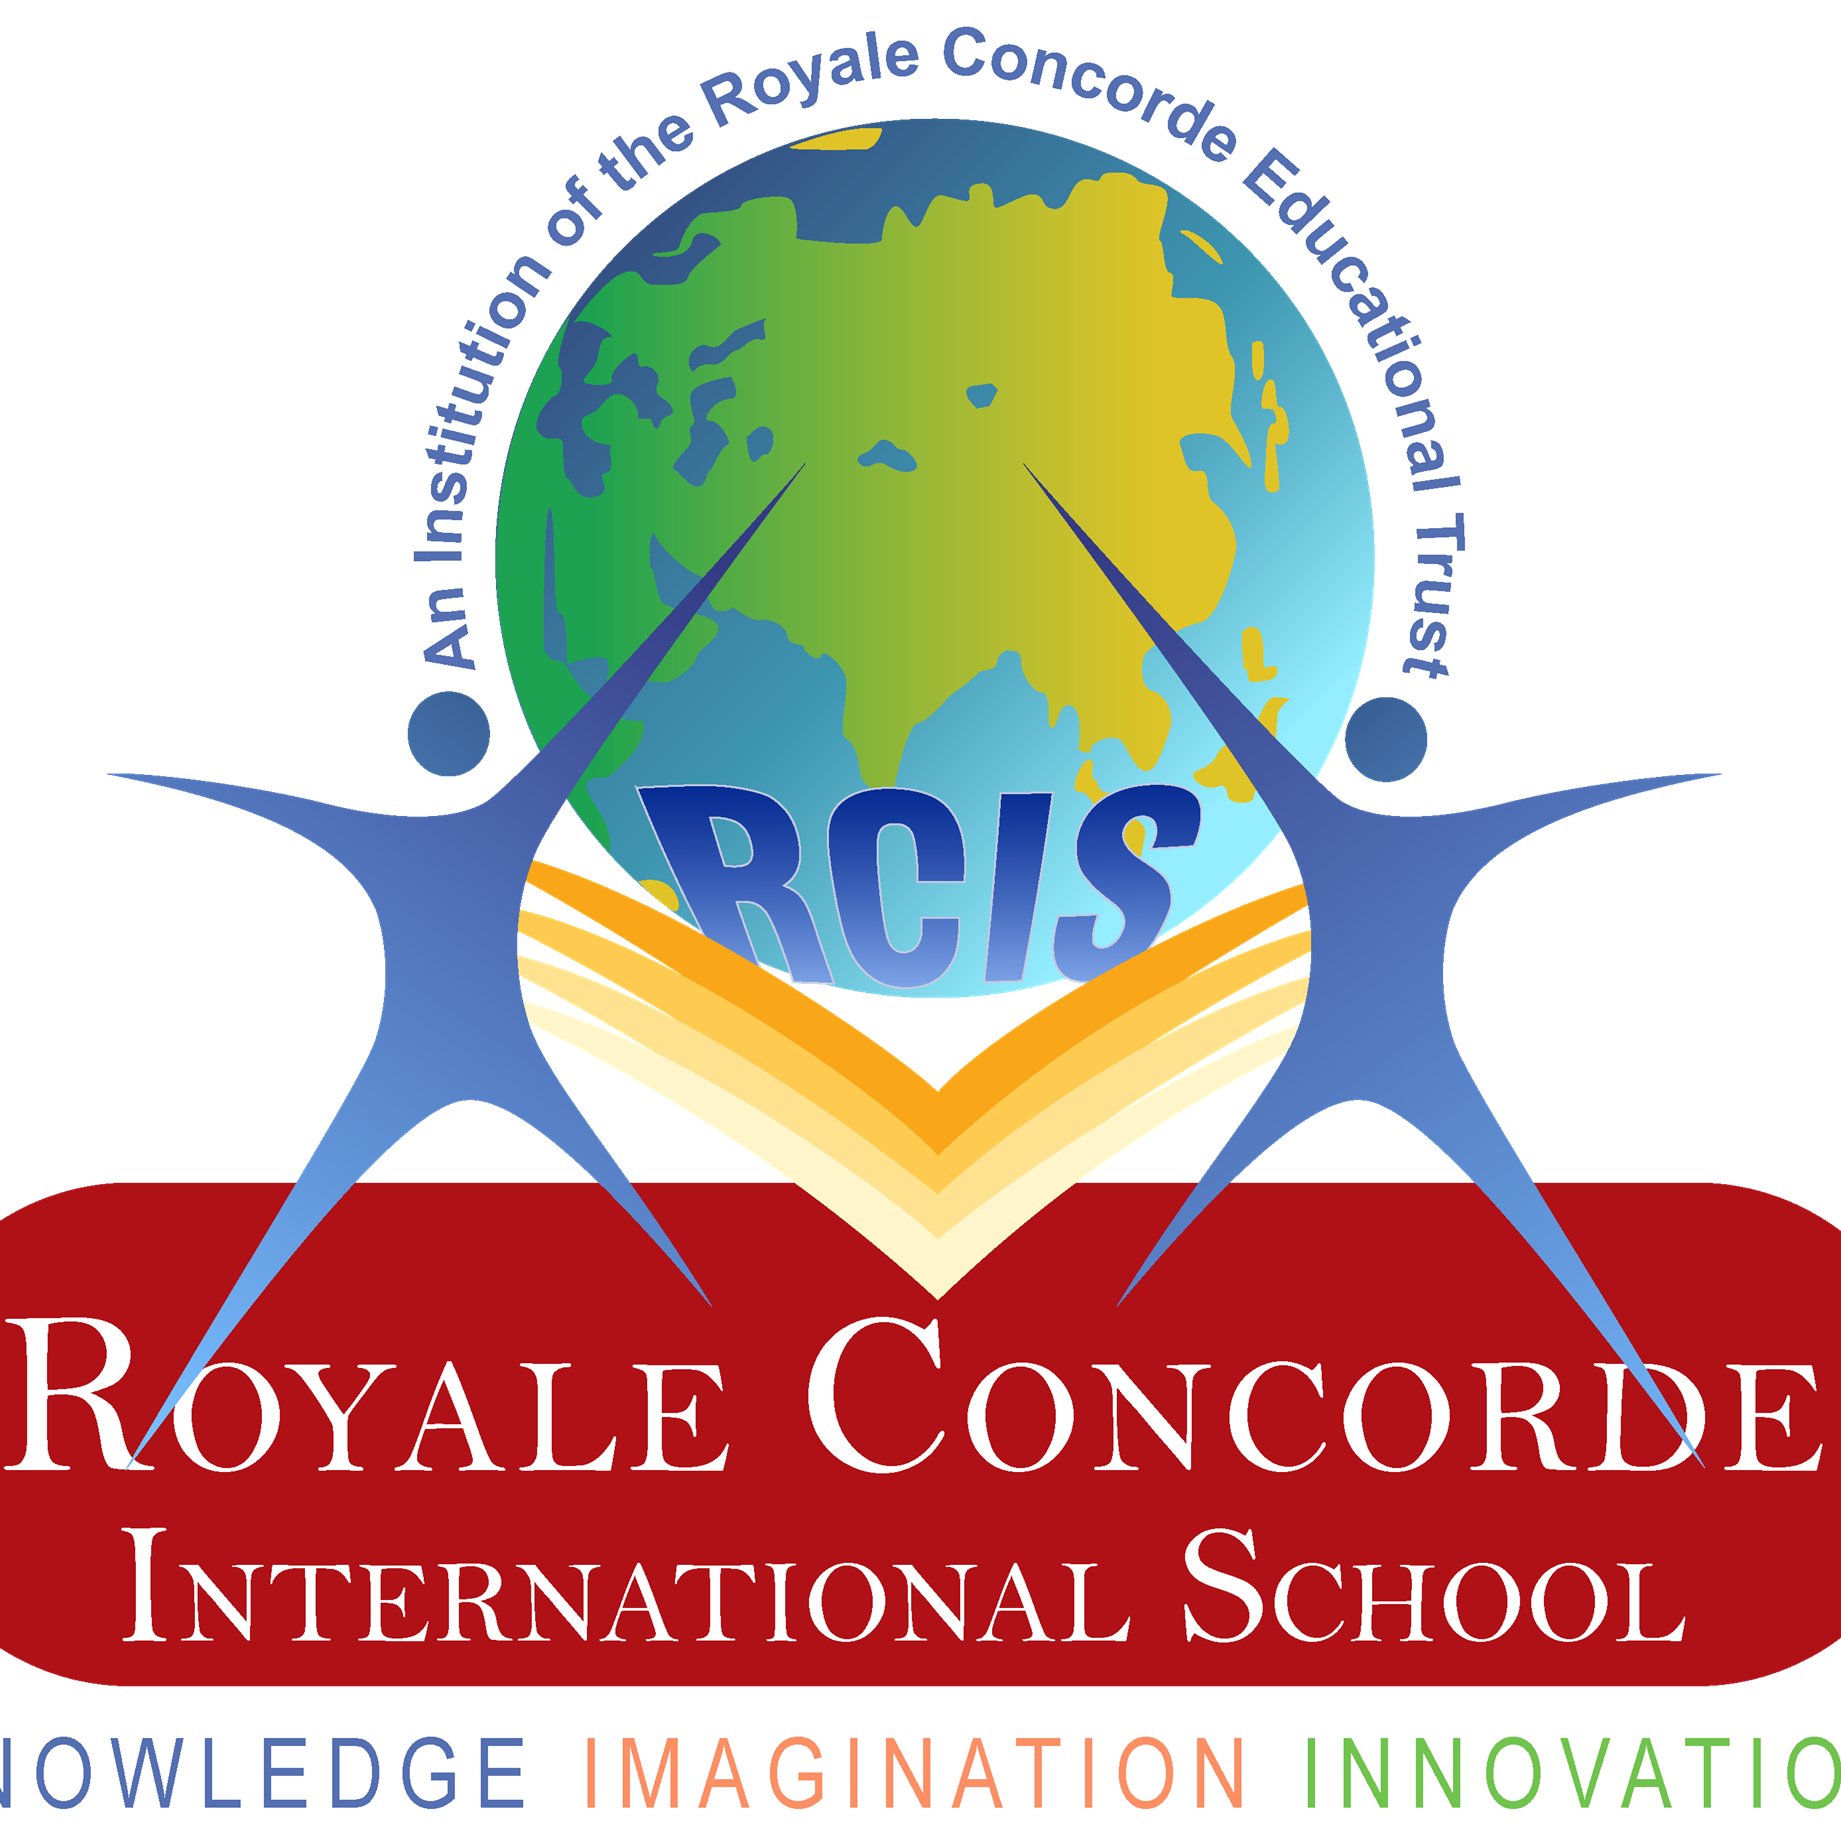 Educational Institutions under the Royal Concorde Education Trust comprise Elementary Schools, Pre Schools, CBSE, ICSE, High Schools, & Montessori.